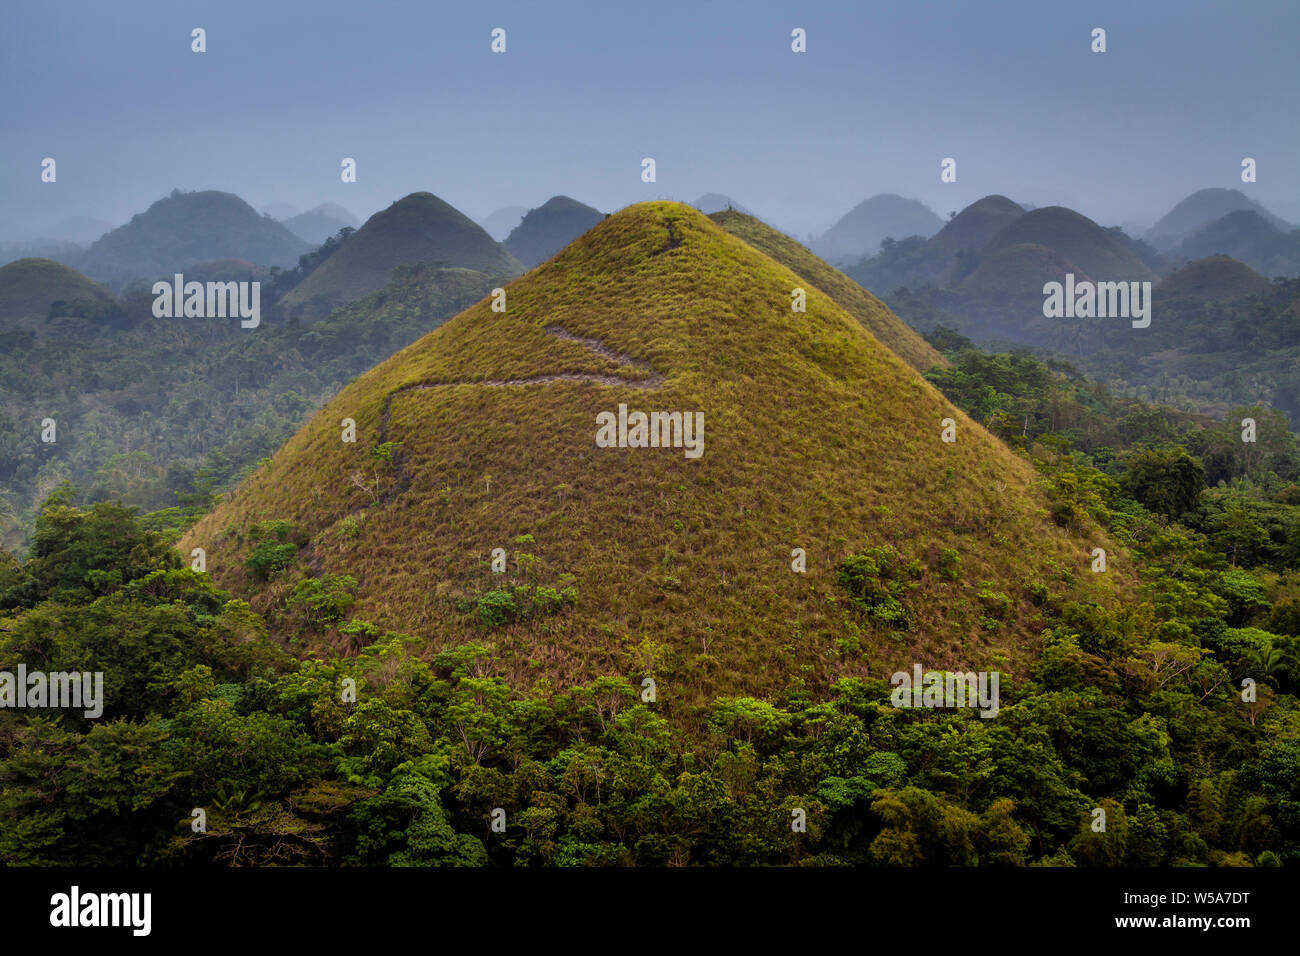 The Chocolate Hills, Carmen, Bohol, The Philippines Stock Photo